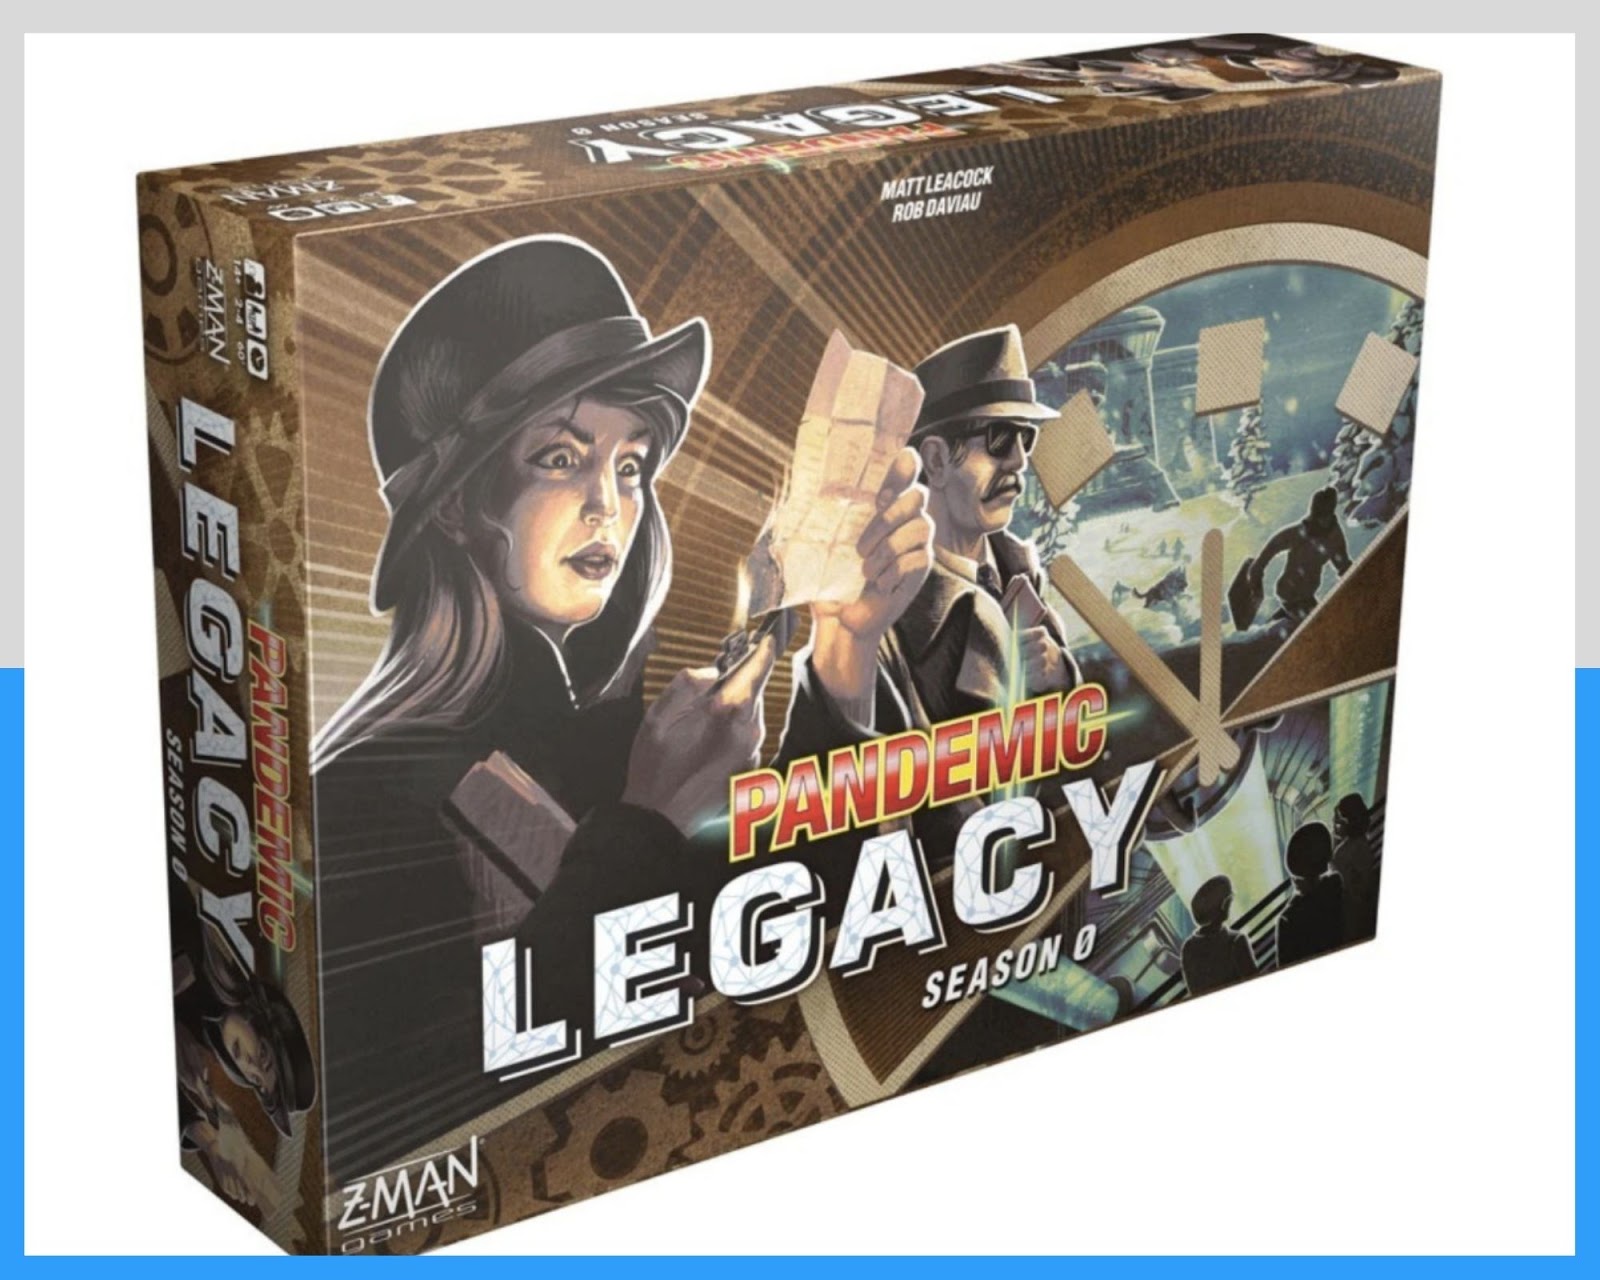 Pandemic: Legacy game